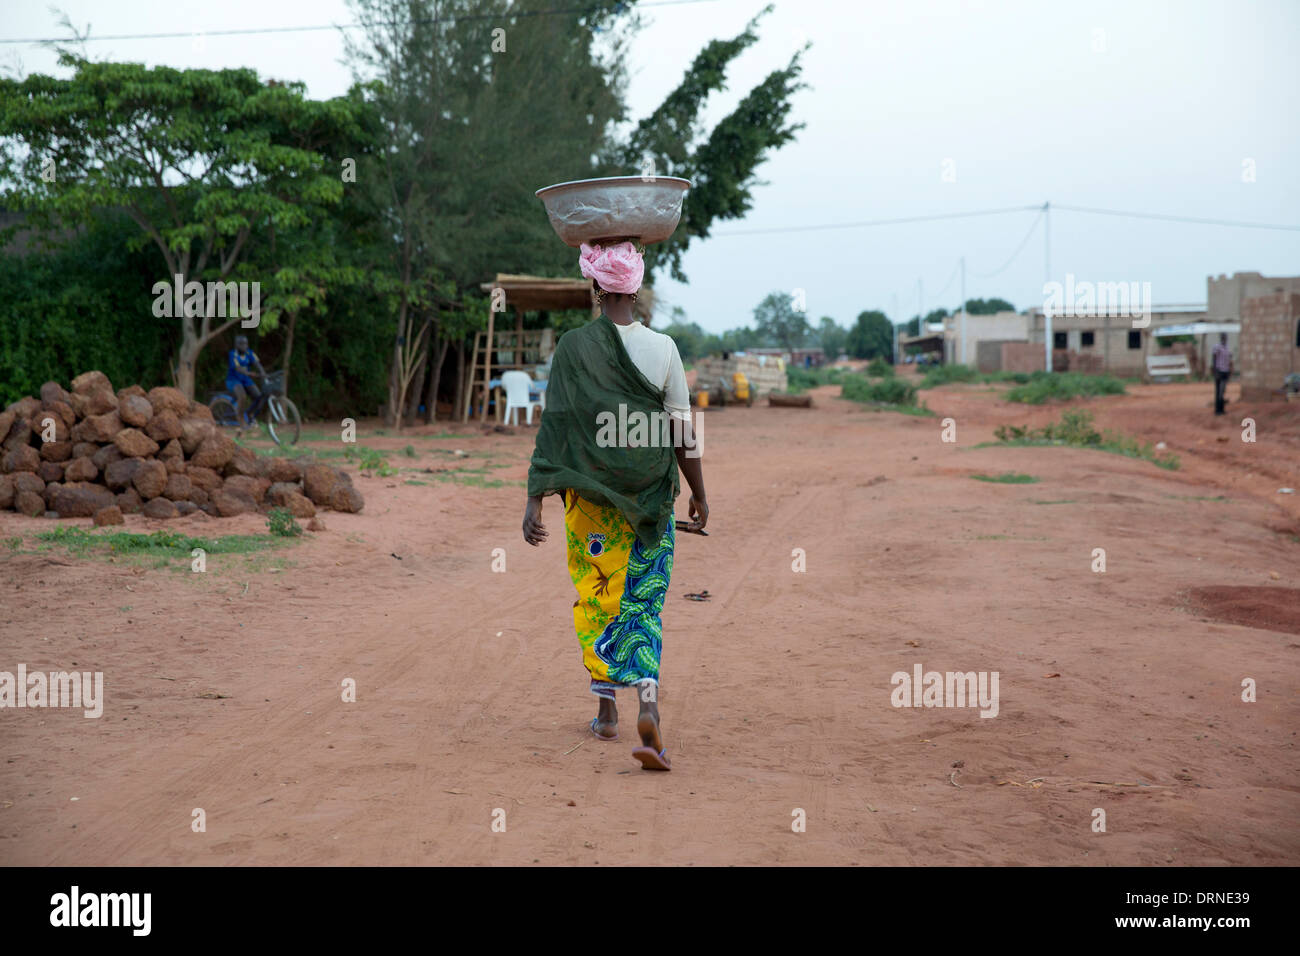 woman acrrying metal bowl on her head, walking down dirt road in Bobo Dioulasso, Burkina Faso, Africa Stock Photo